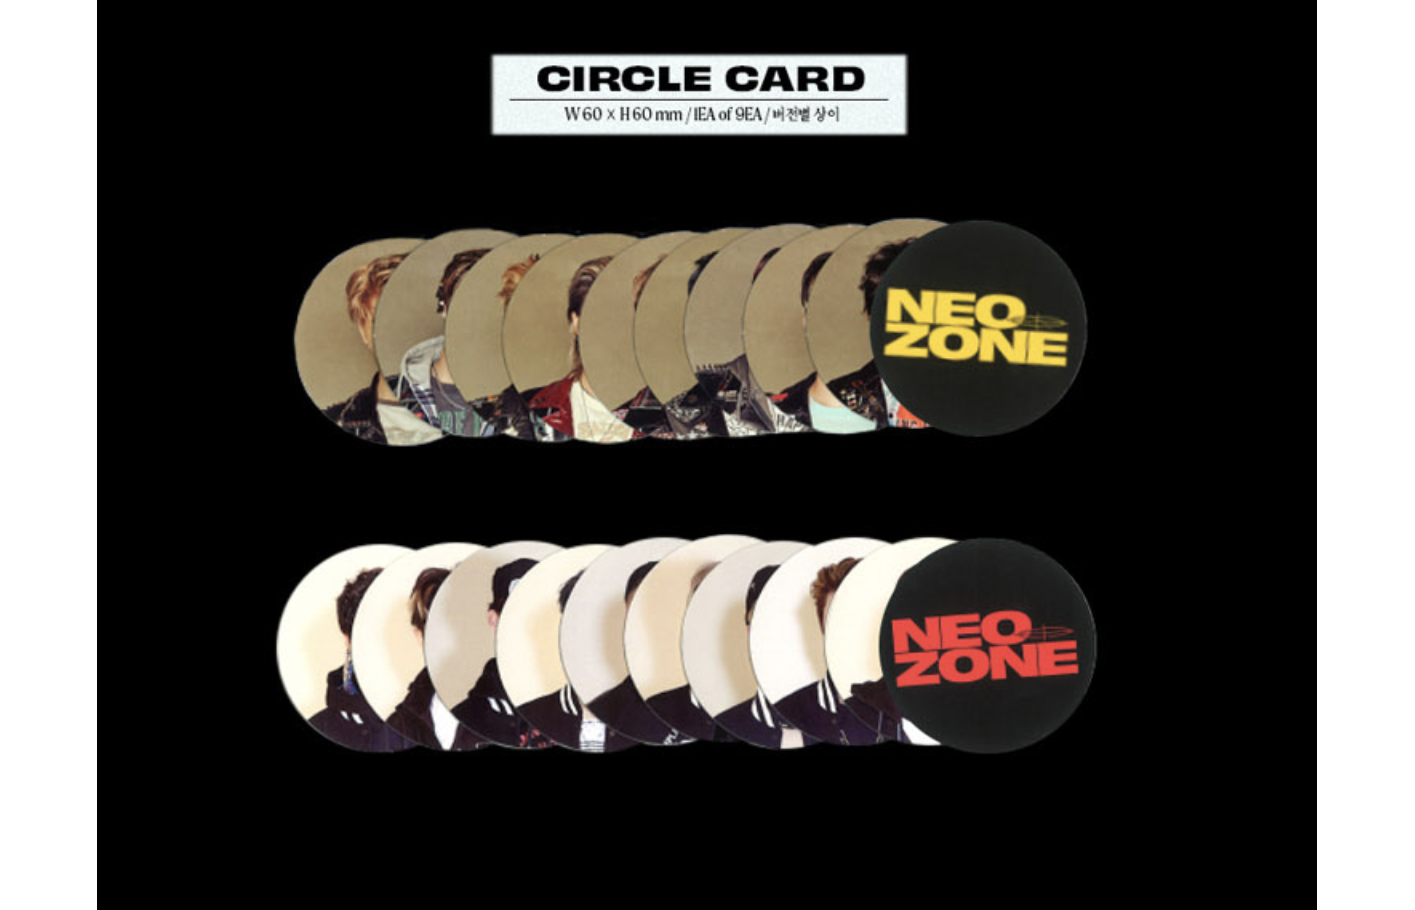 NCT 127 Vol.2: Neo Zone